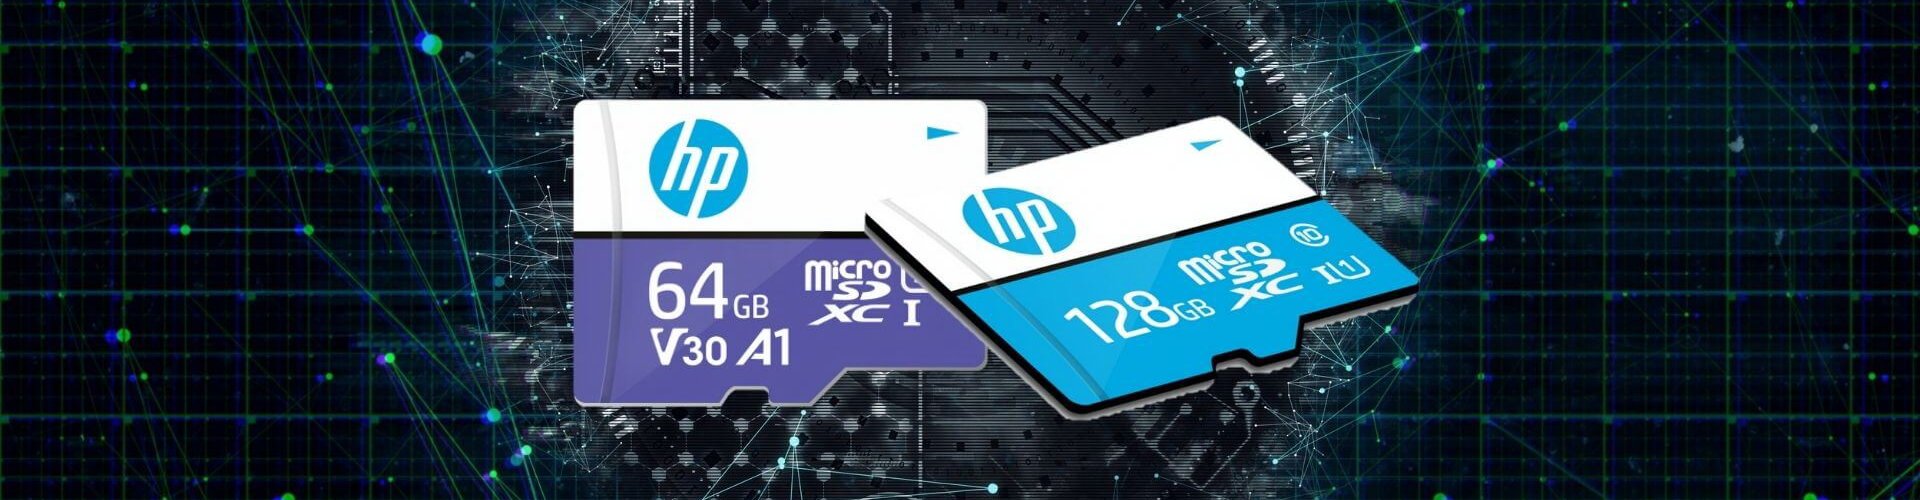 HP-Memory-Card-Banner-qdu7jg0w5sqpnaqsom26ttpxh8ikrg1qqc3qyx49s8